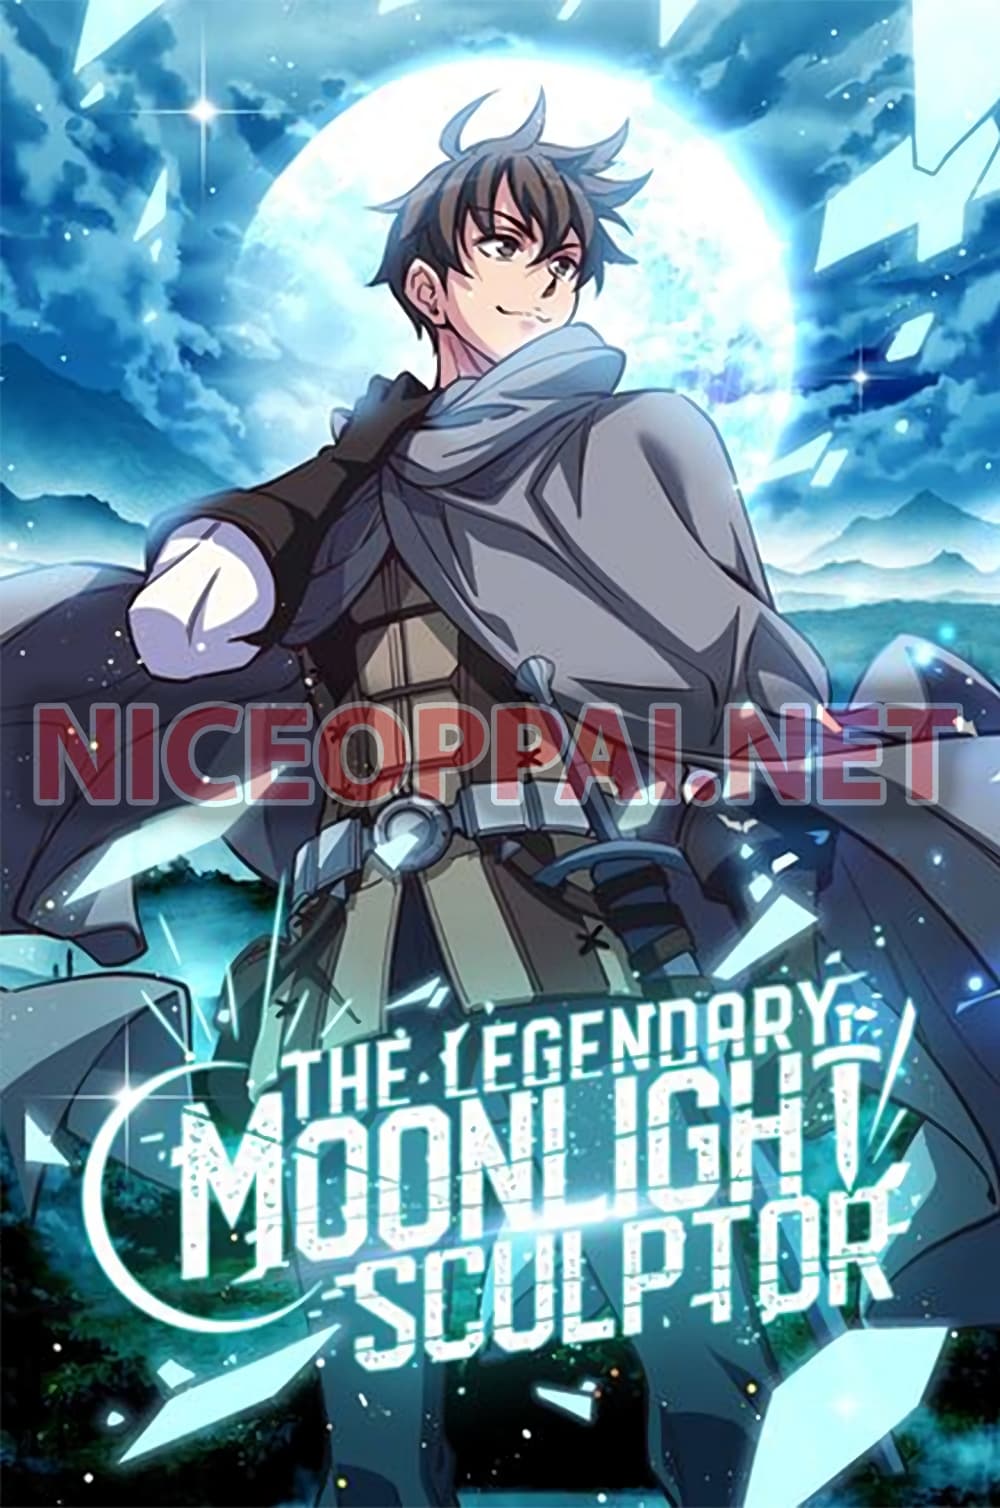 Legendary Moonlight Sculptor ประติมากรแสงจันทร์ในตำนาน 168-168